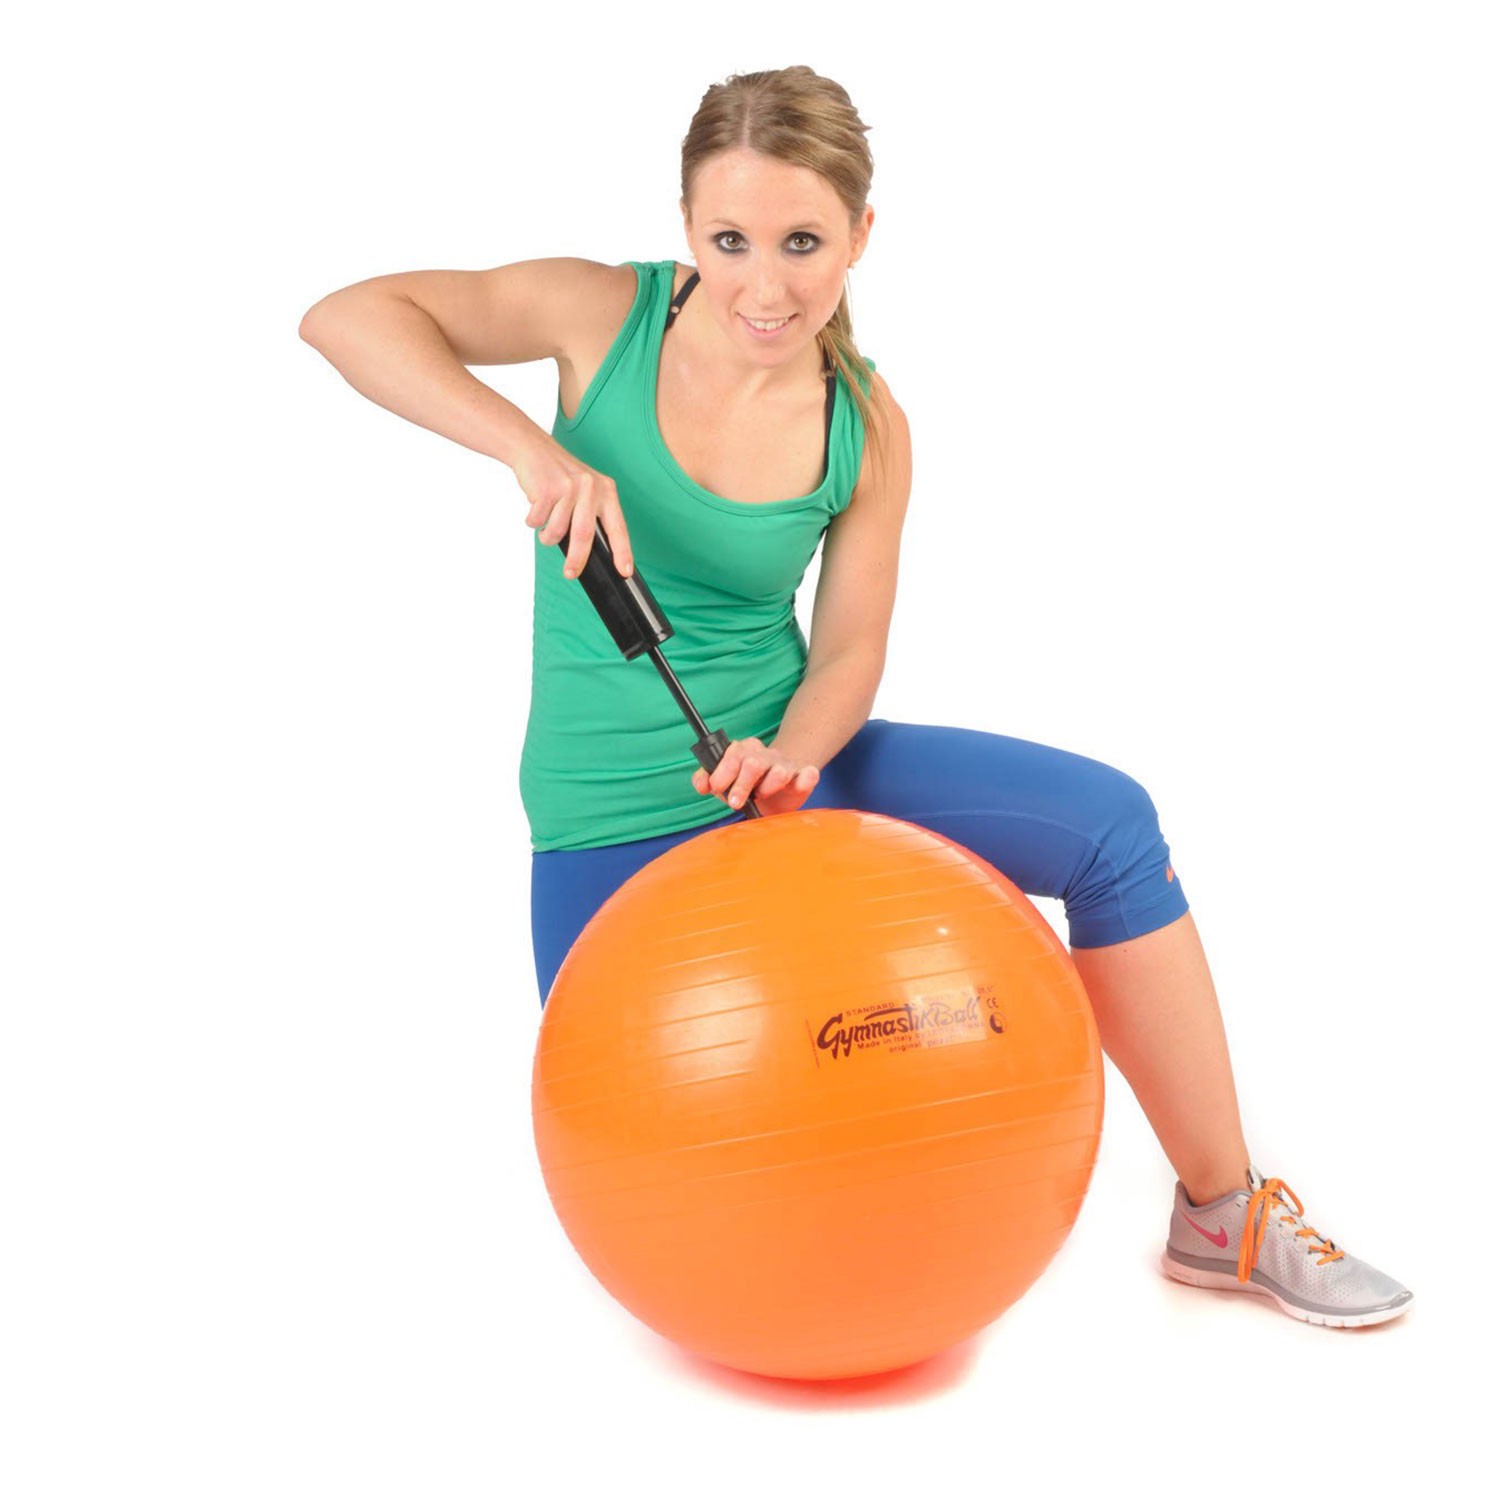 Gymnastikball / Pezziball oder Sitzball richtig aufpumpen